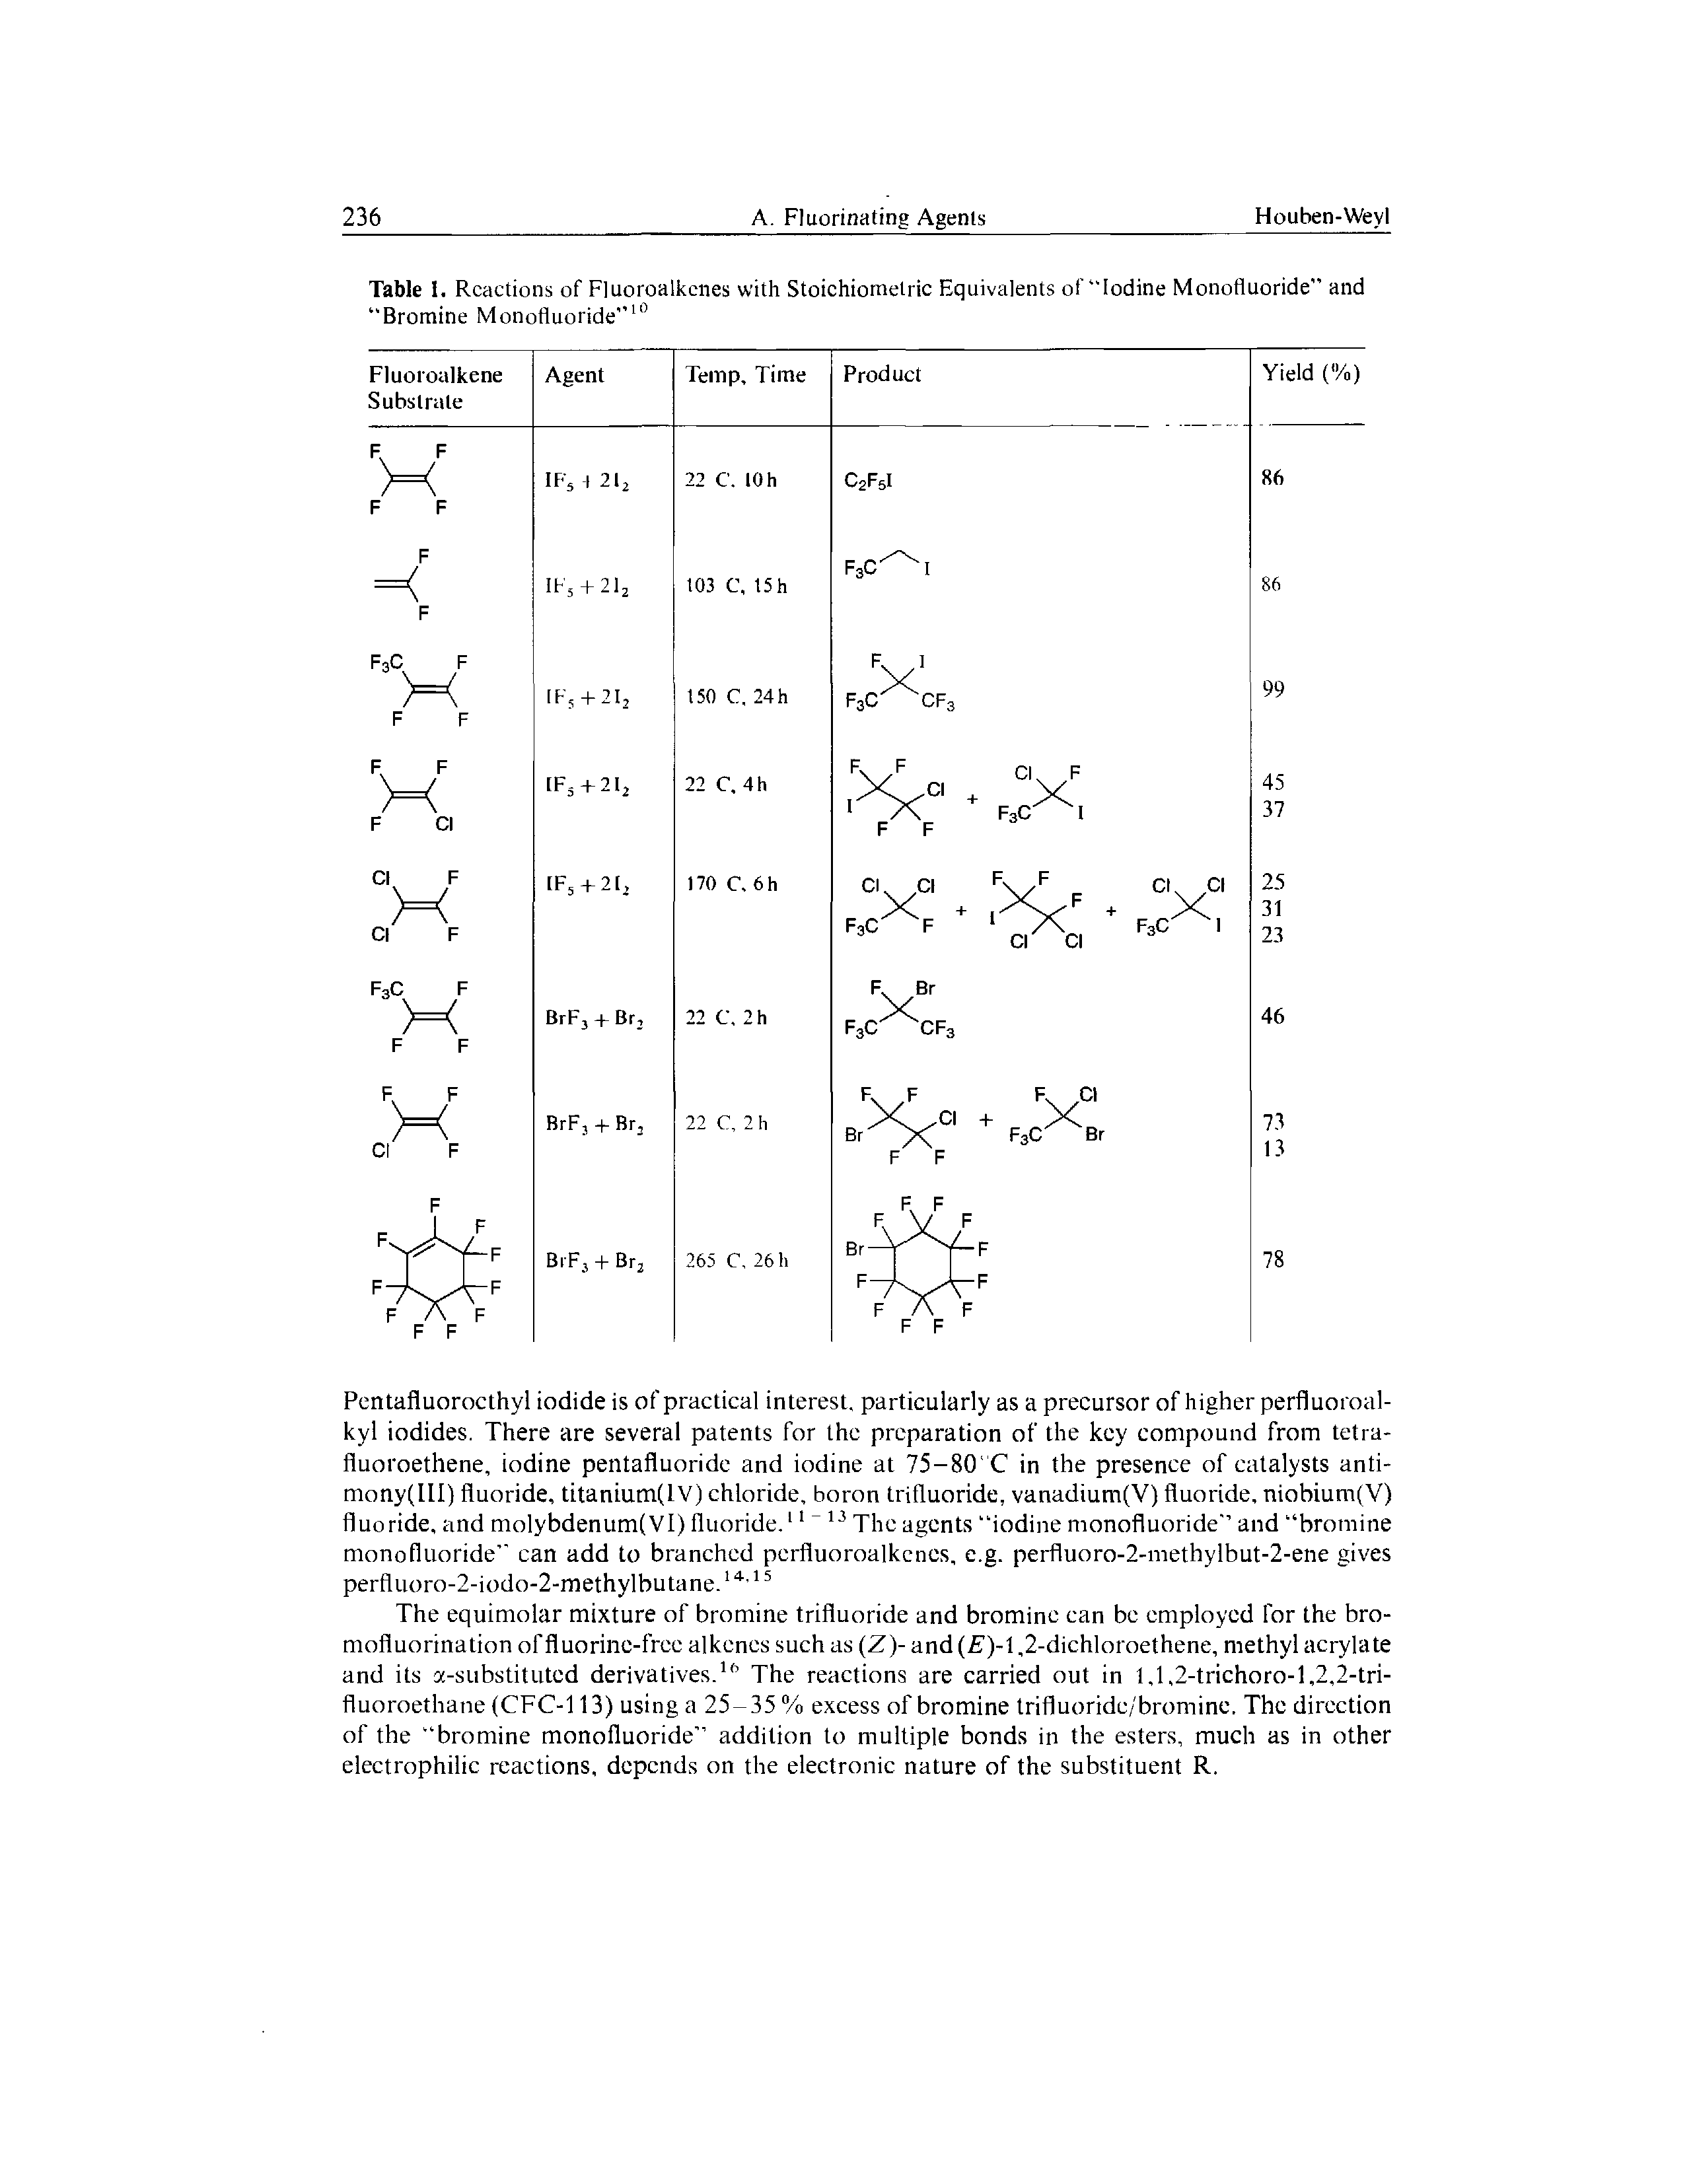 Table 1. Reactions of Fluoroalkcnes with Stoichiometric Equivalents of Iodine Monofluoride" and Bromine Monofluoride"10...